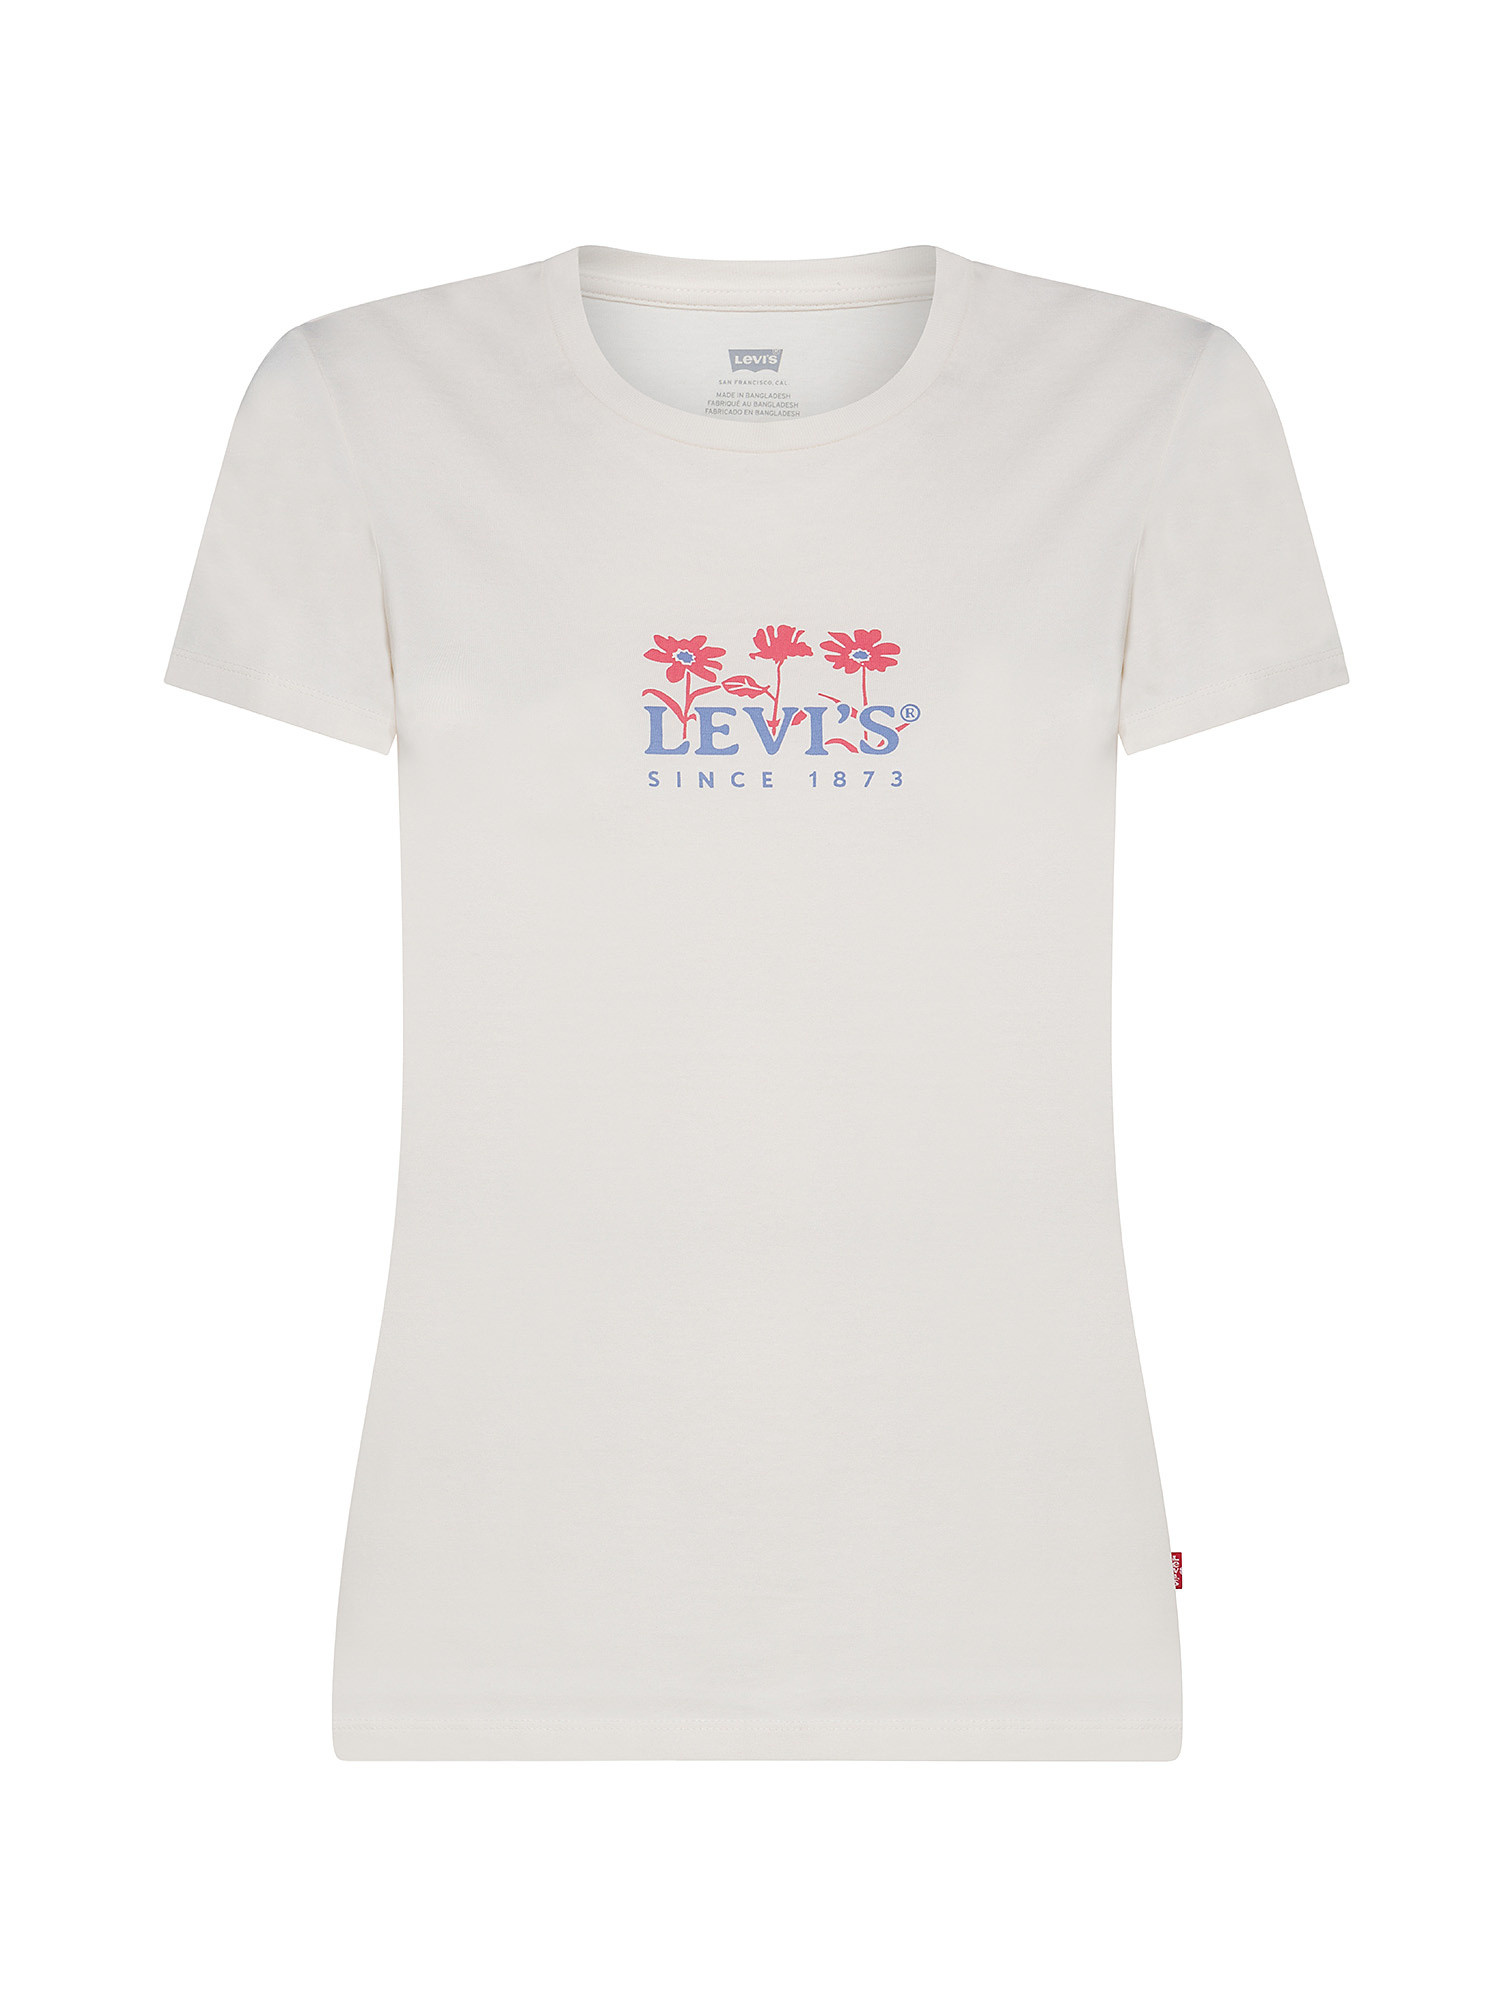 Levi's - Floral Logo T-Shirt, White, large image number 0